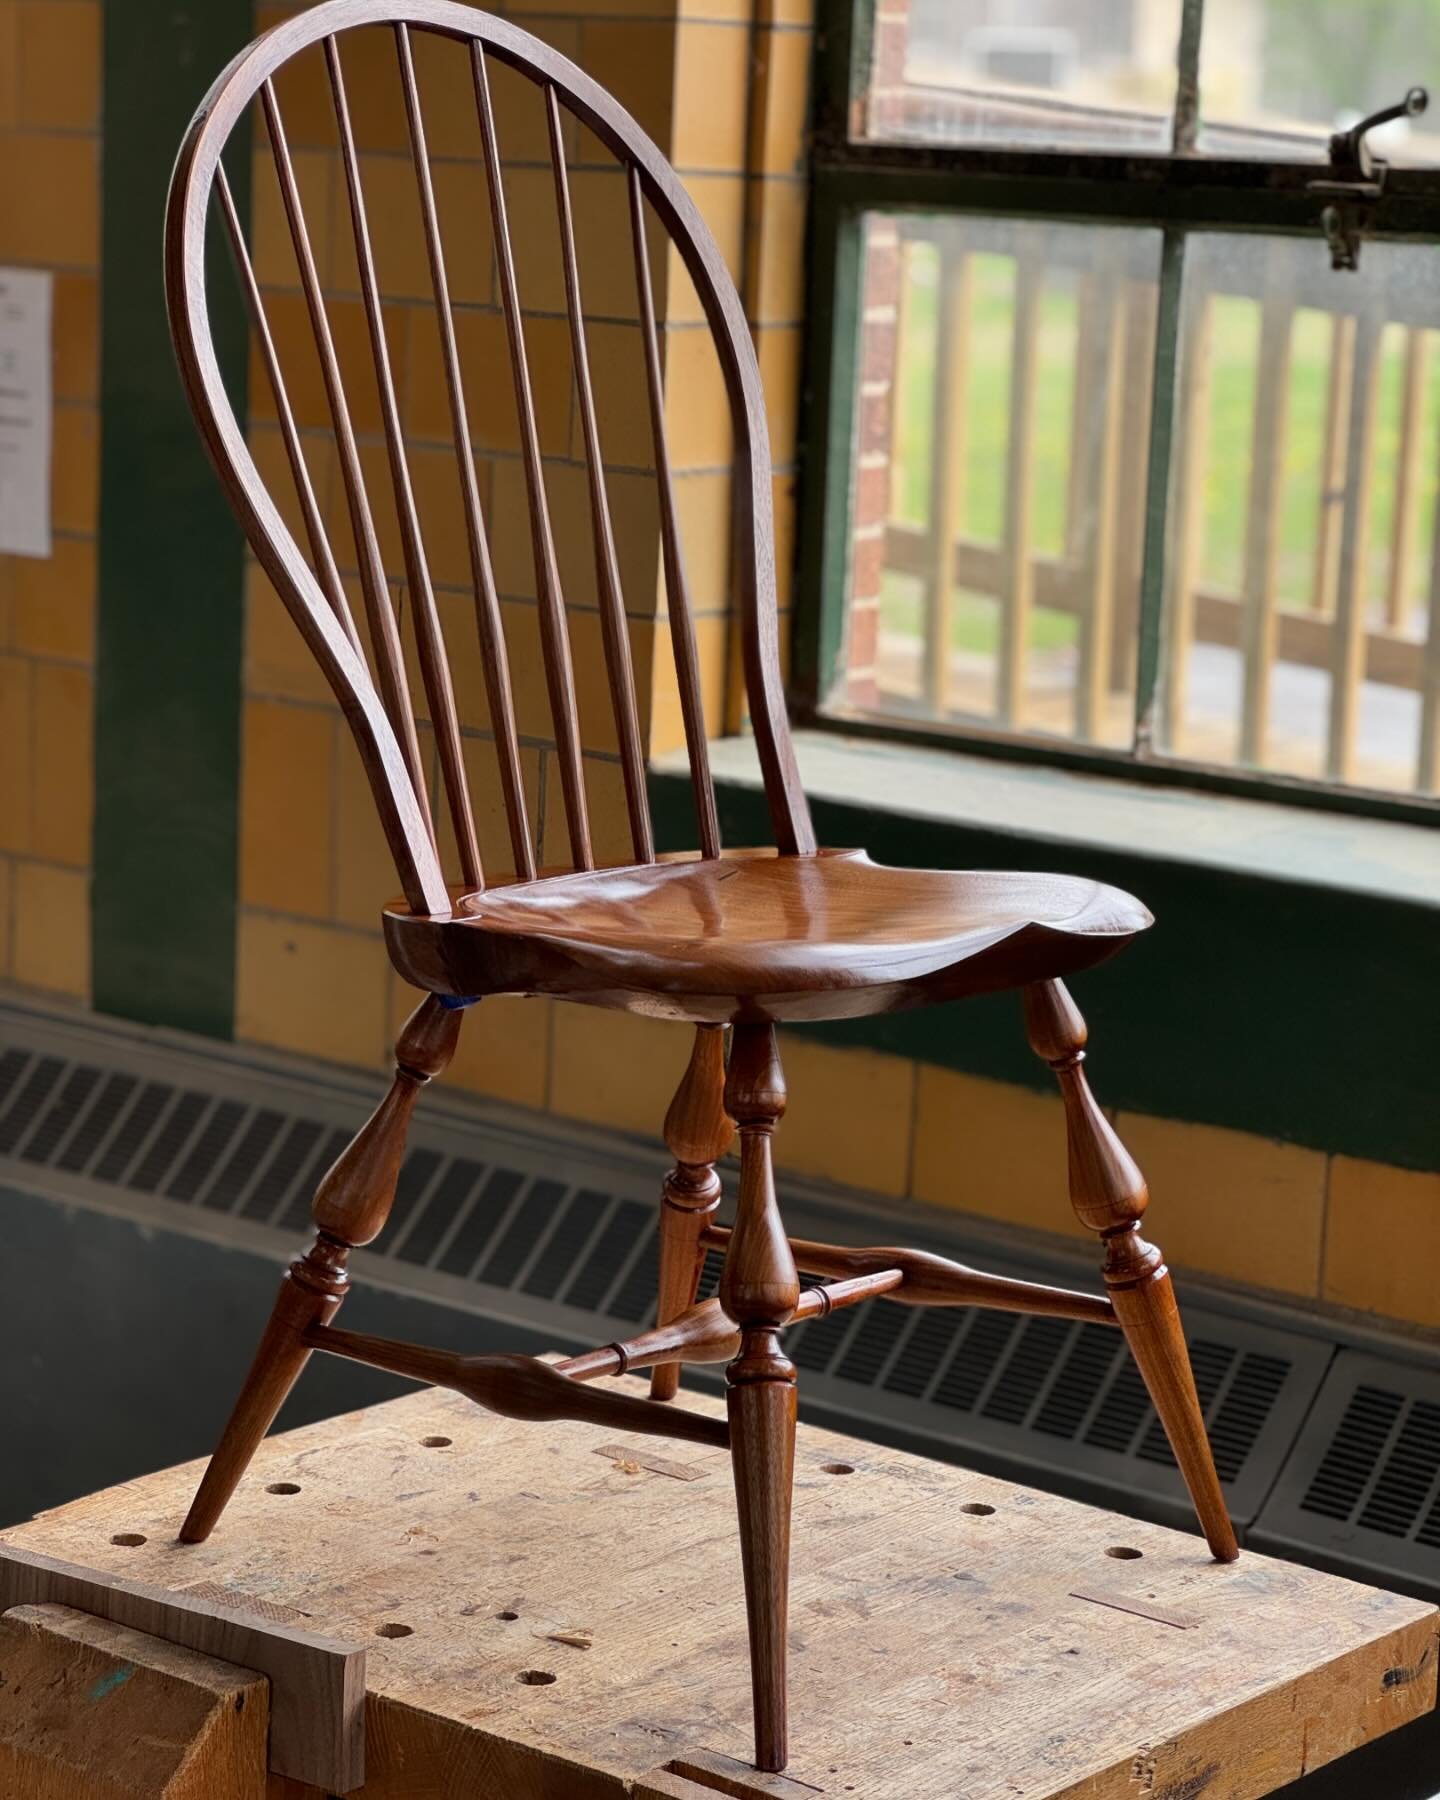 Traditional American Windsor Chair in Walnut and Ebony by SBWI President Luke Barnett. #woodworking #art #design #artist